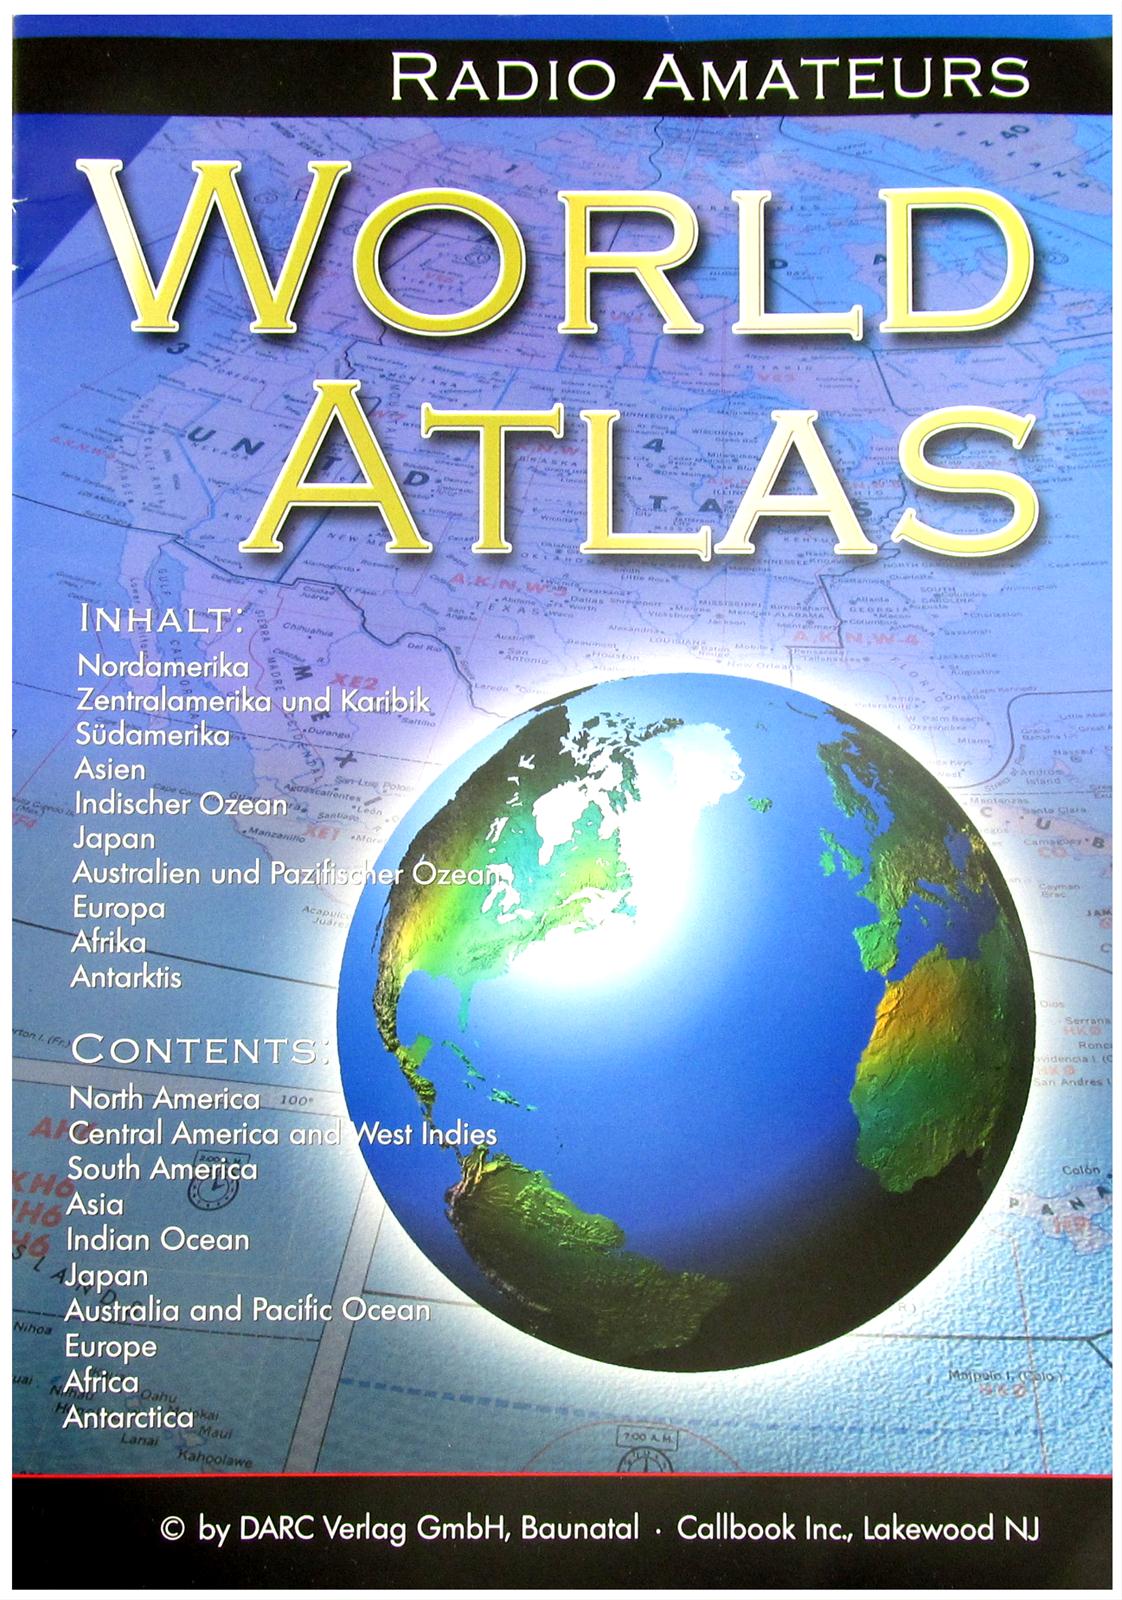 ARRL 5226 ARRL's Radio Amateurs World Atlas | DX Engineering